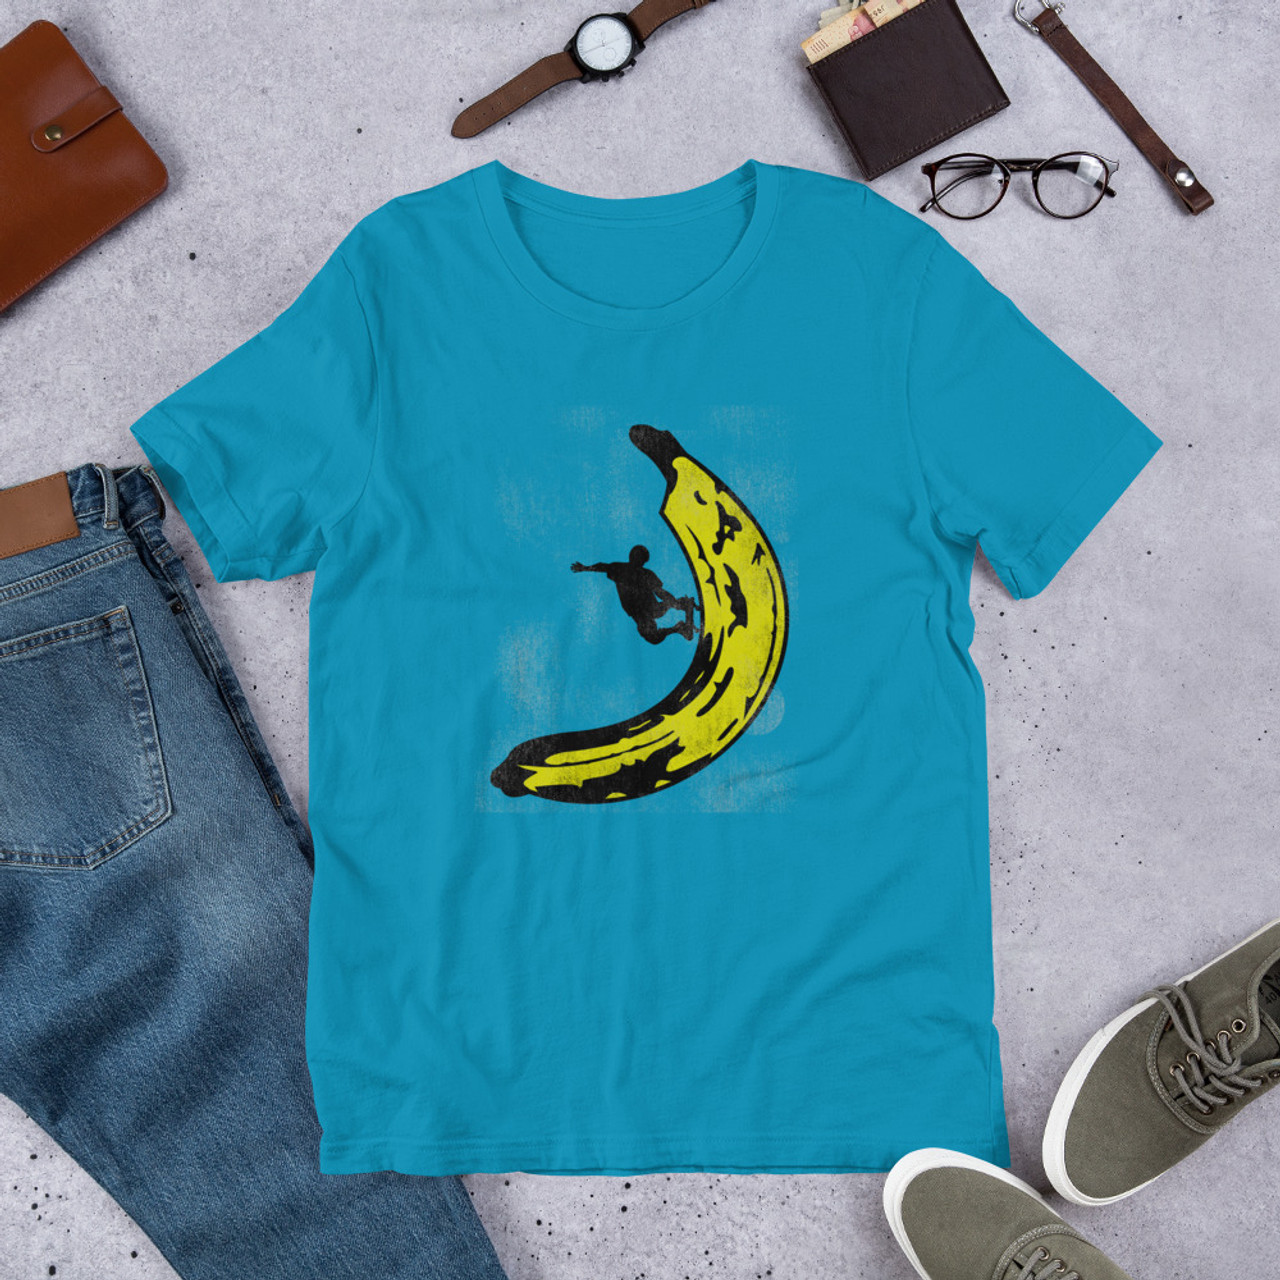 Aqua T-Shirt - Bella + Canvas 3001 Banana Skateboard